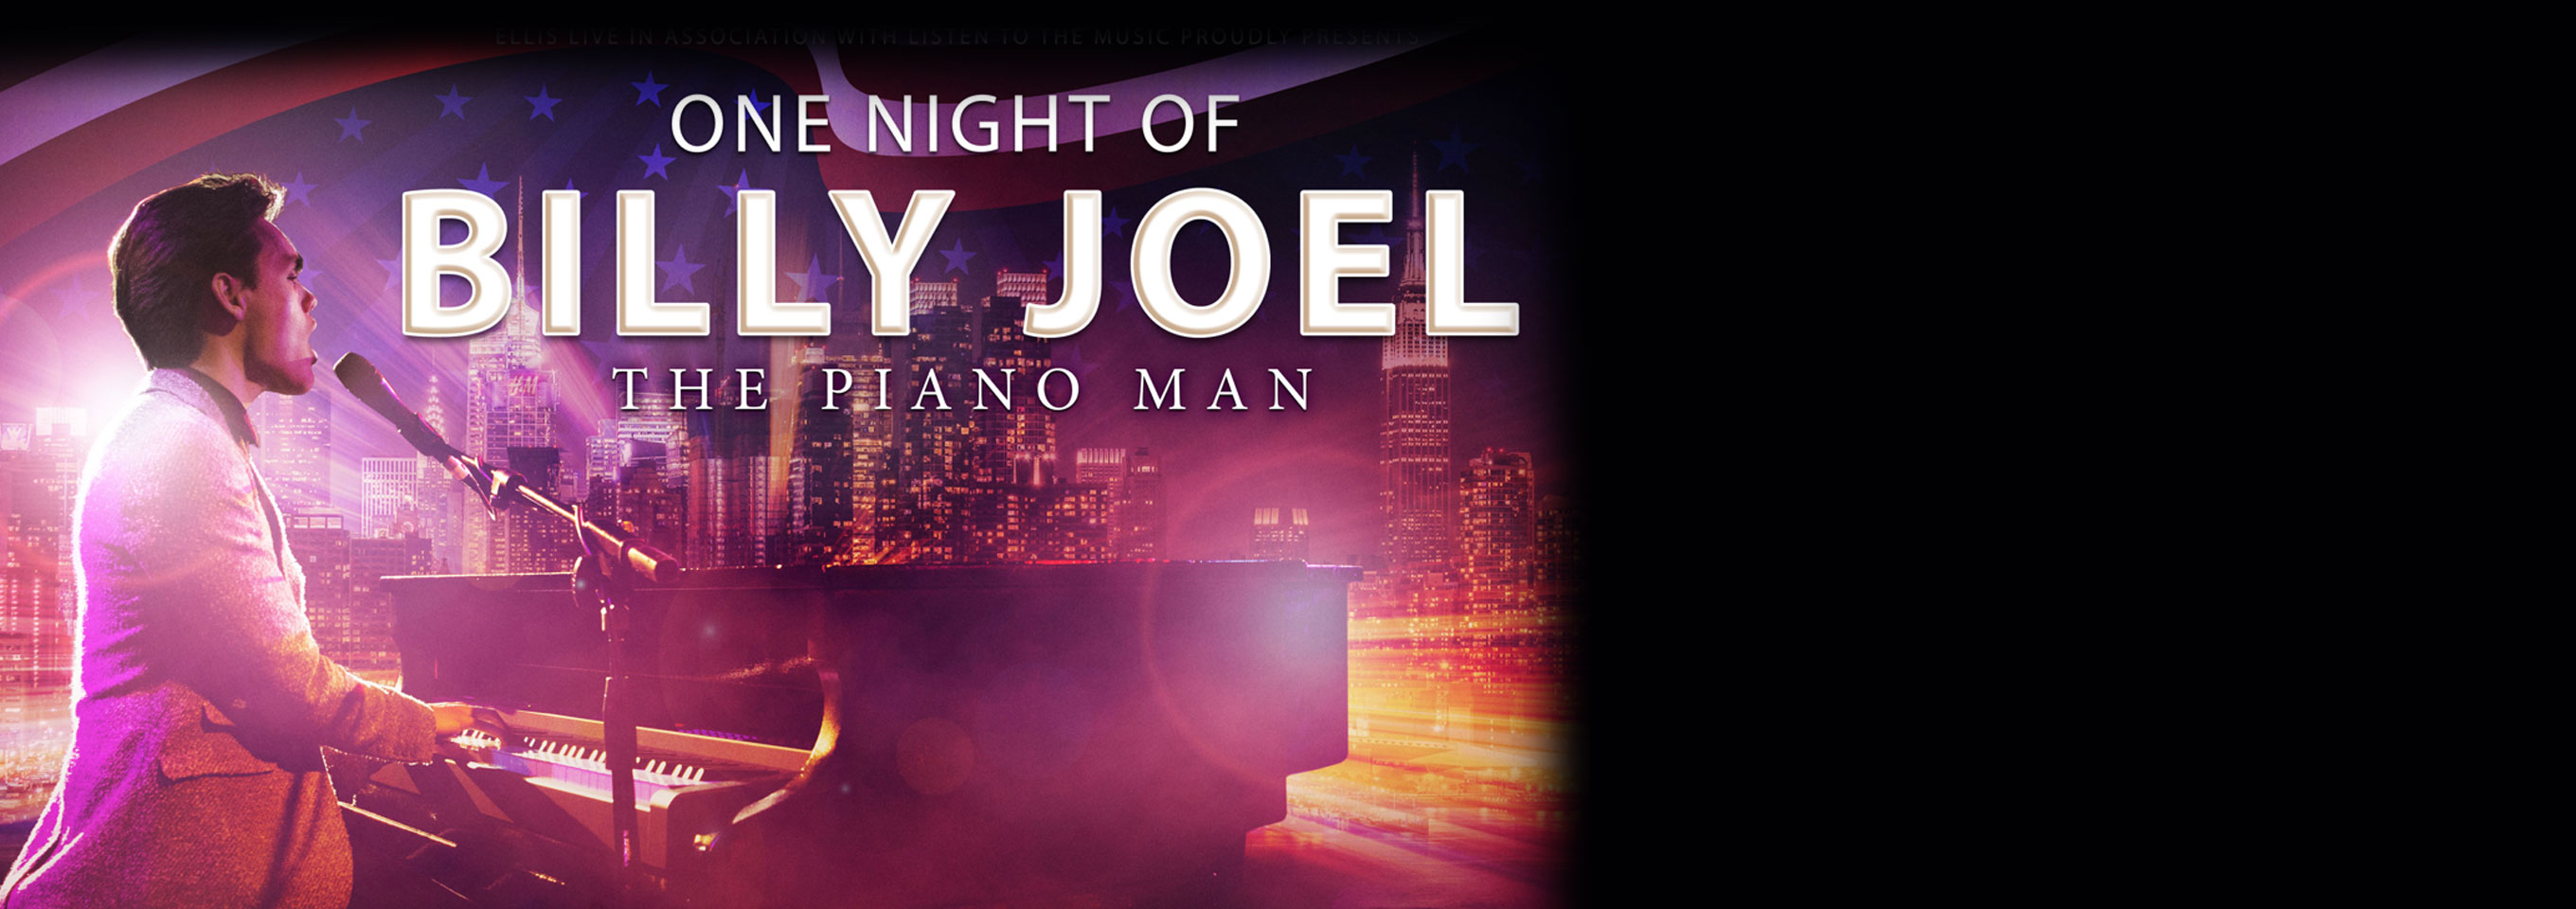 Billy Joel: Piano Man hero image